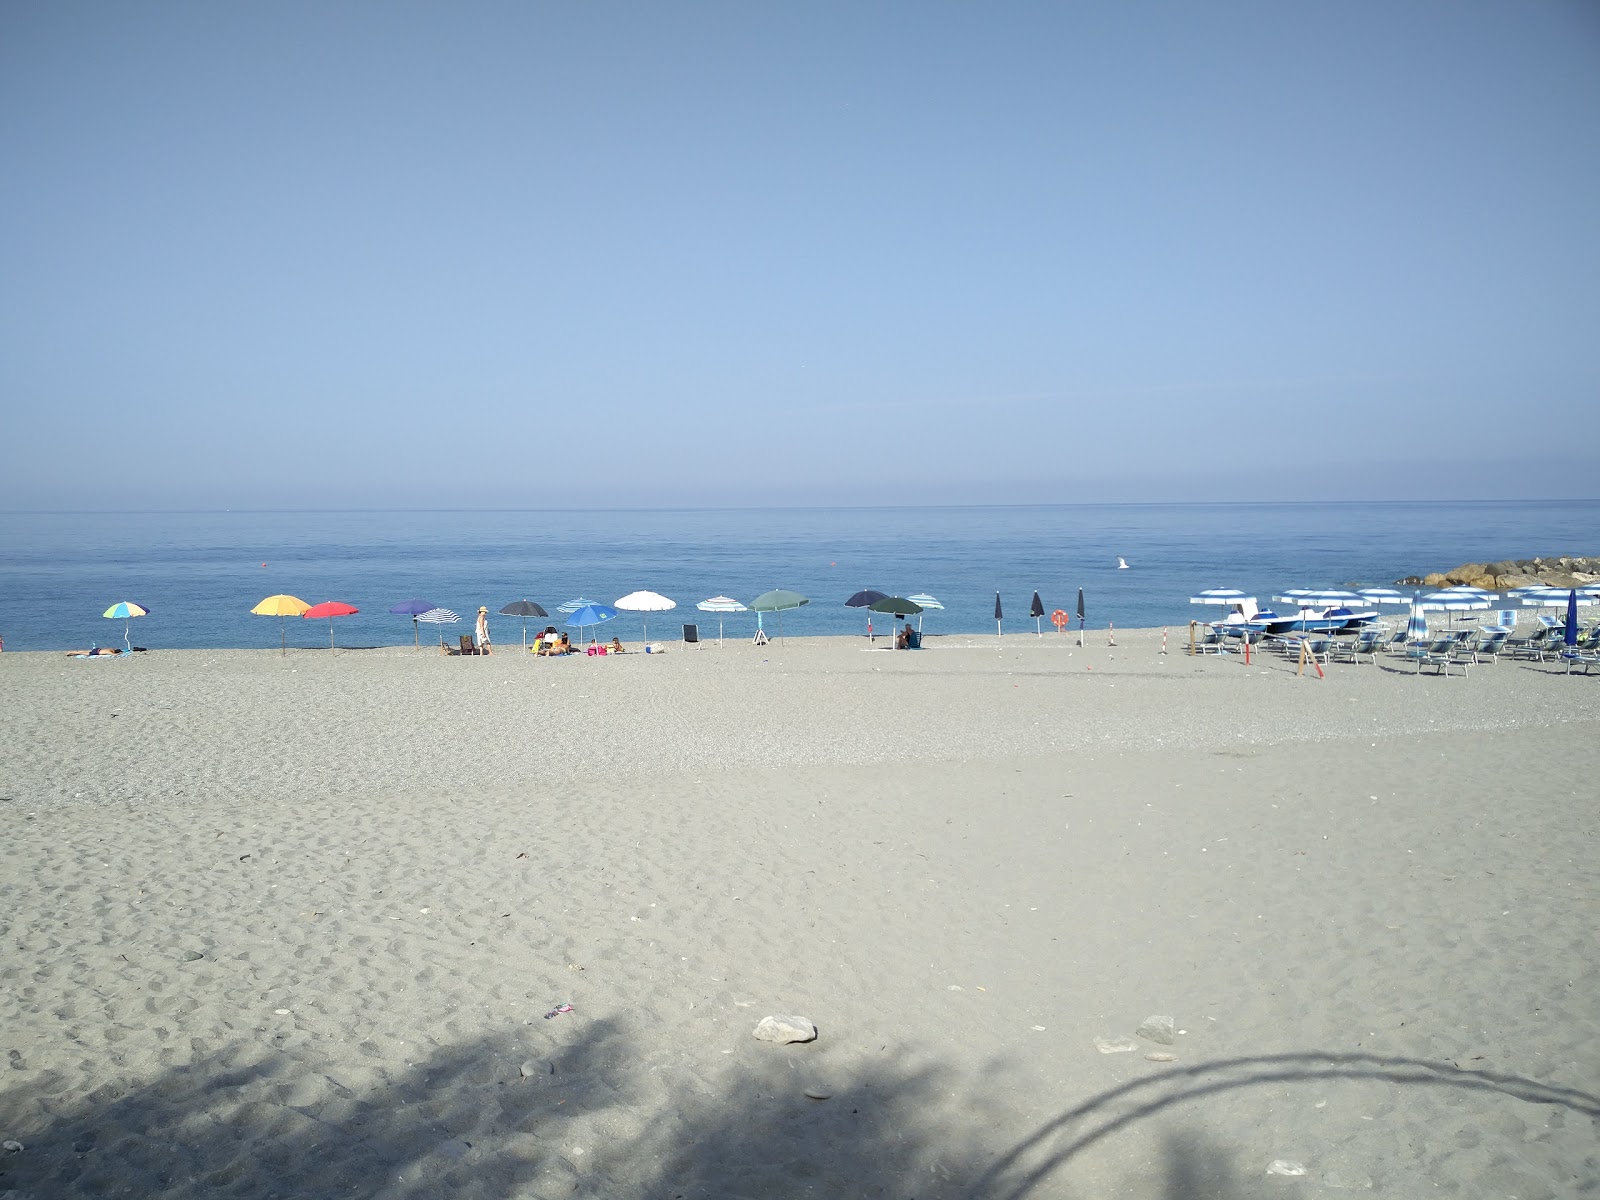 Foto de Spiaggia Amantea - lugar popular entre os apreciadores de relaxamento